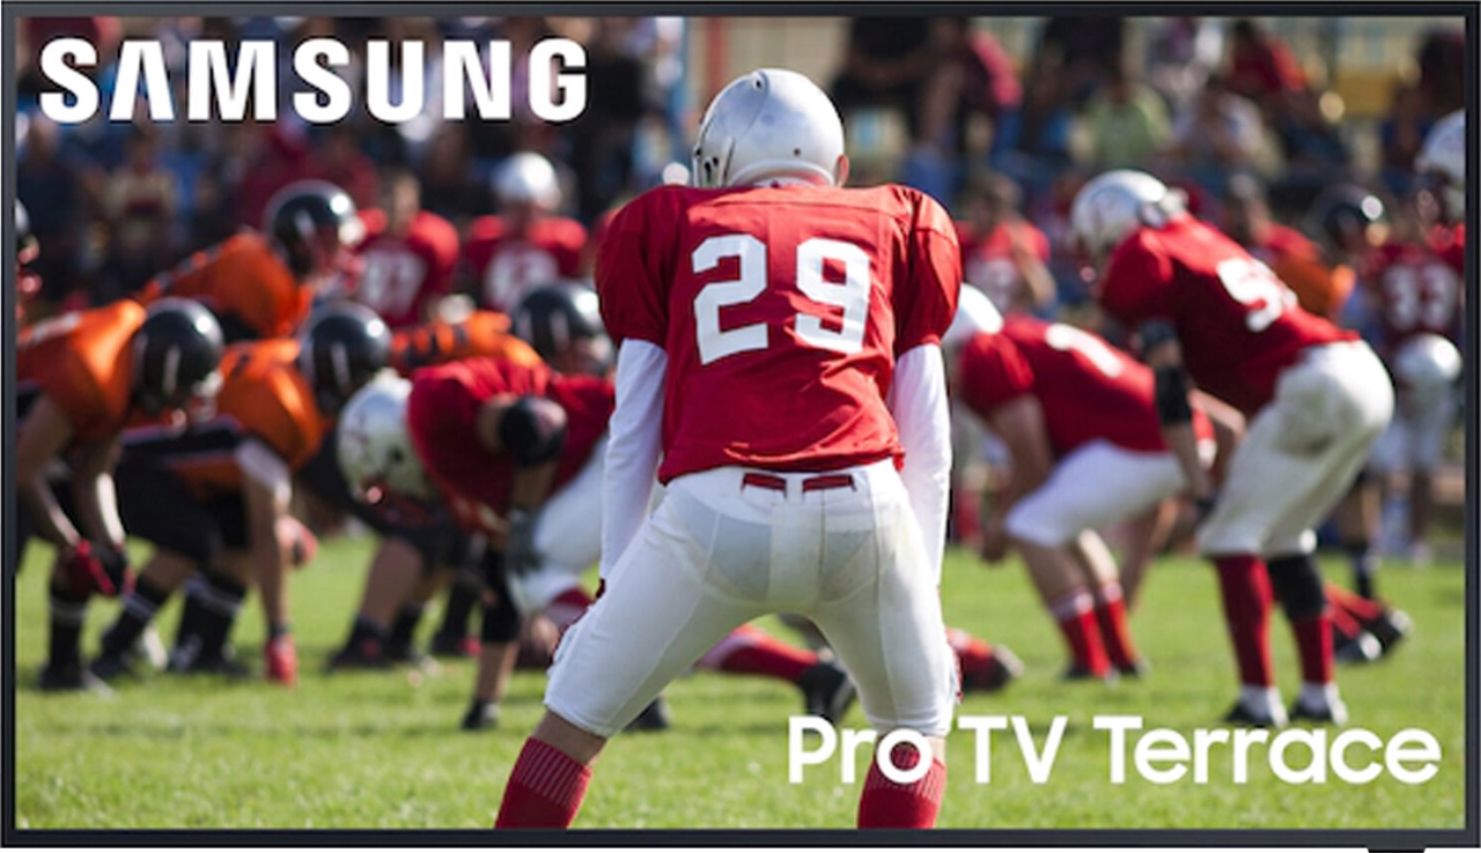 Samsung - 75" CLASS BH75T Terrace Edition LED Outdoor Partial Sun 4k Commercial Grade TV